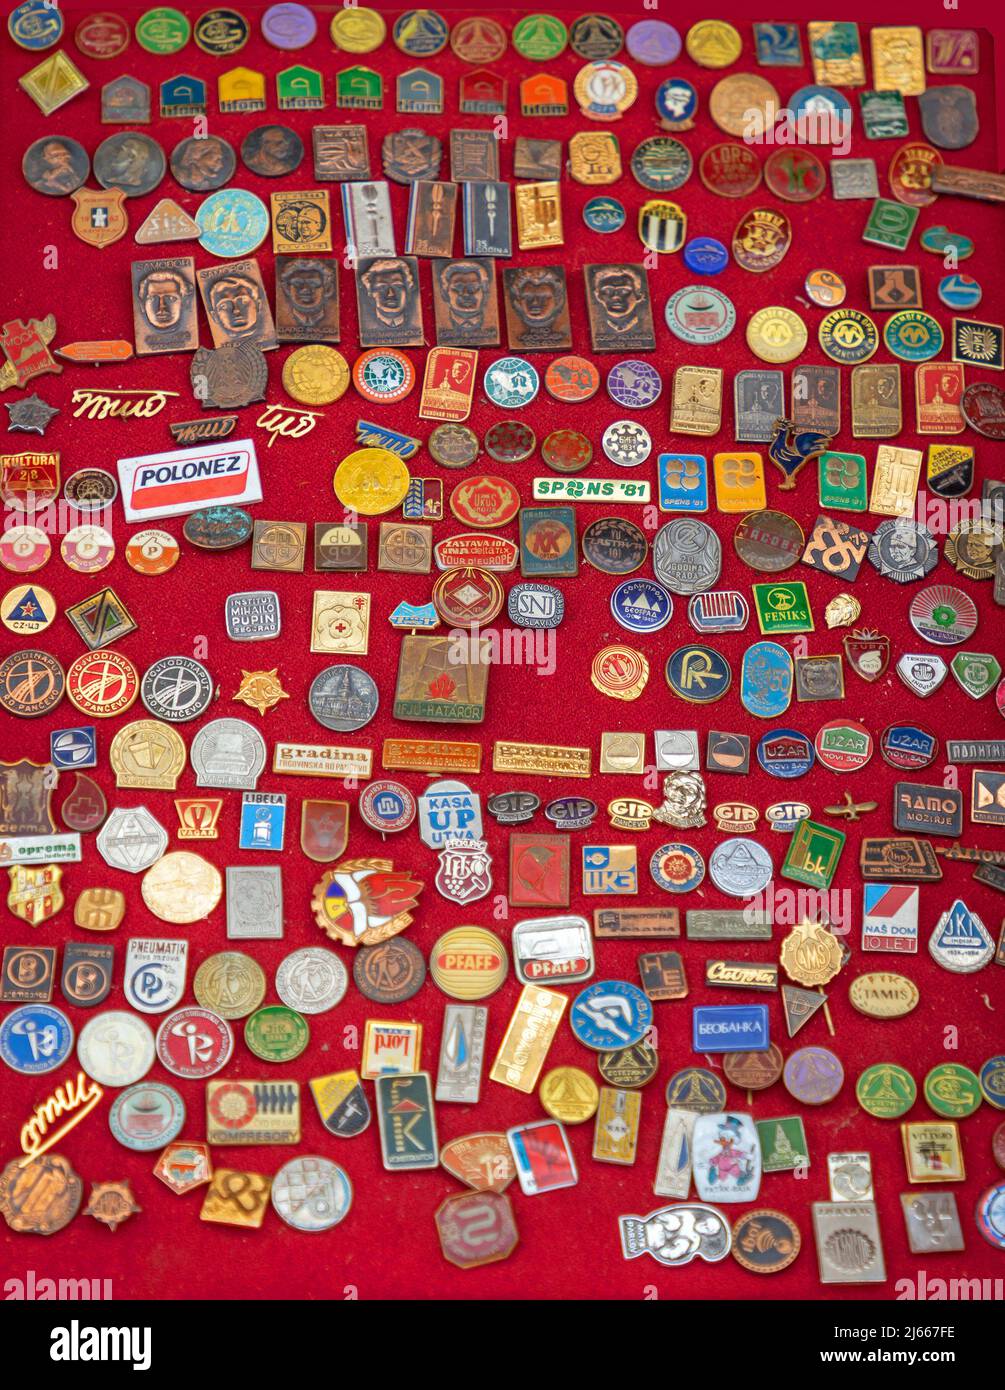 Belgrade, Serbia - July 25, 2021: Old retro pin badges collectible items memorabilia sold on flea market in Belgrade for collectors. Stock Photo